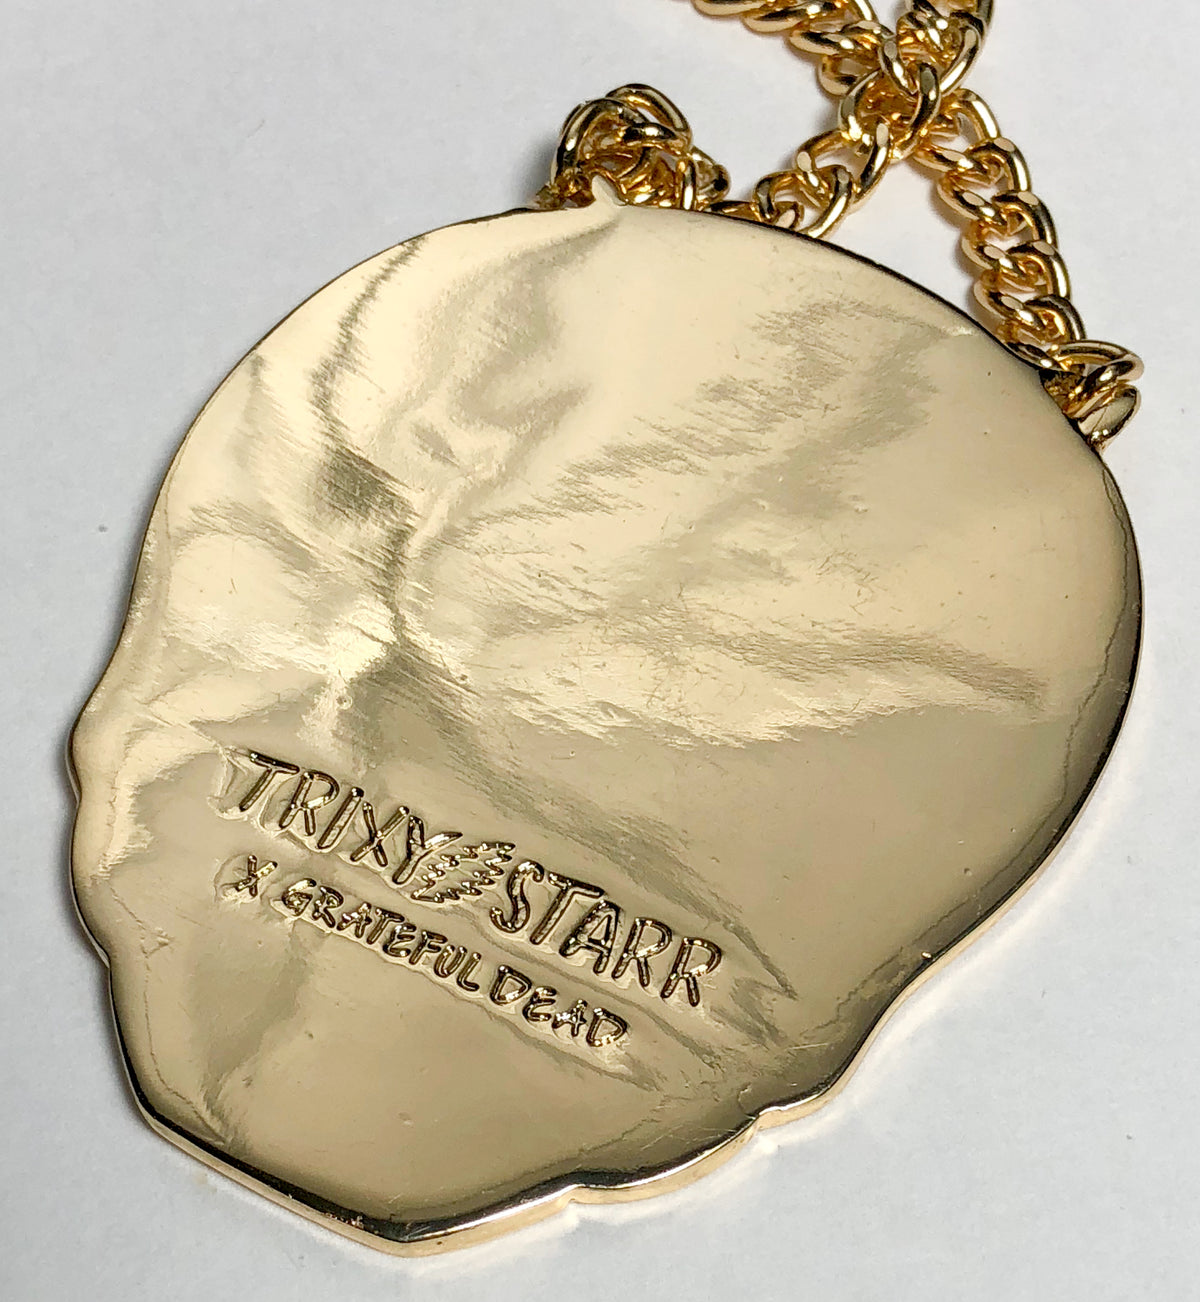 TRiXY STARR X GRATEFUL DEAD - Unicorn Stealie necklace, Gold